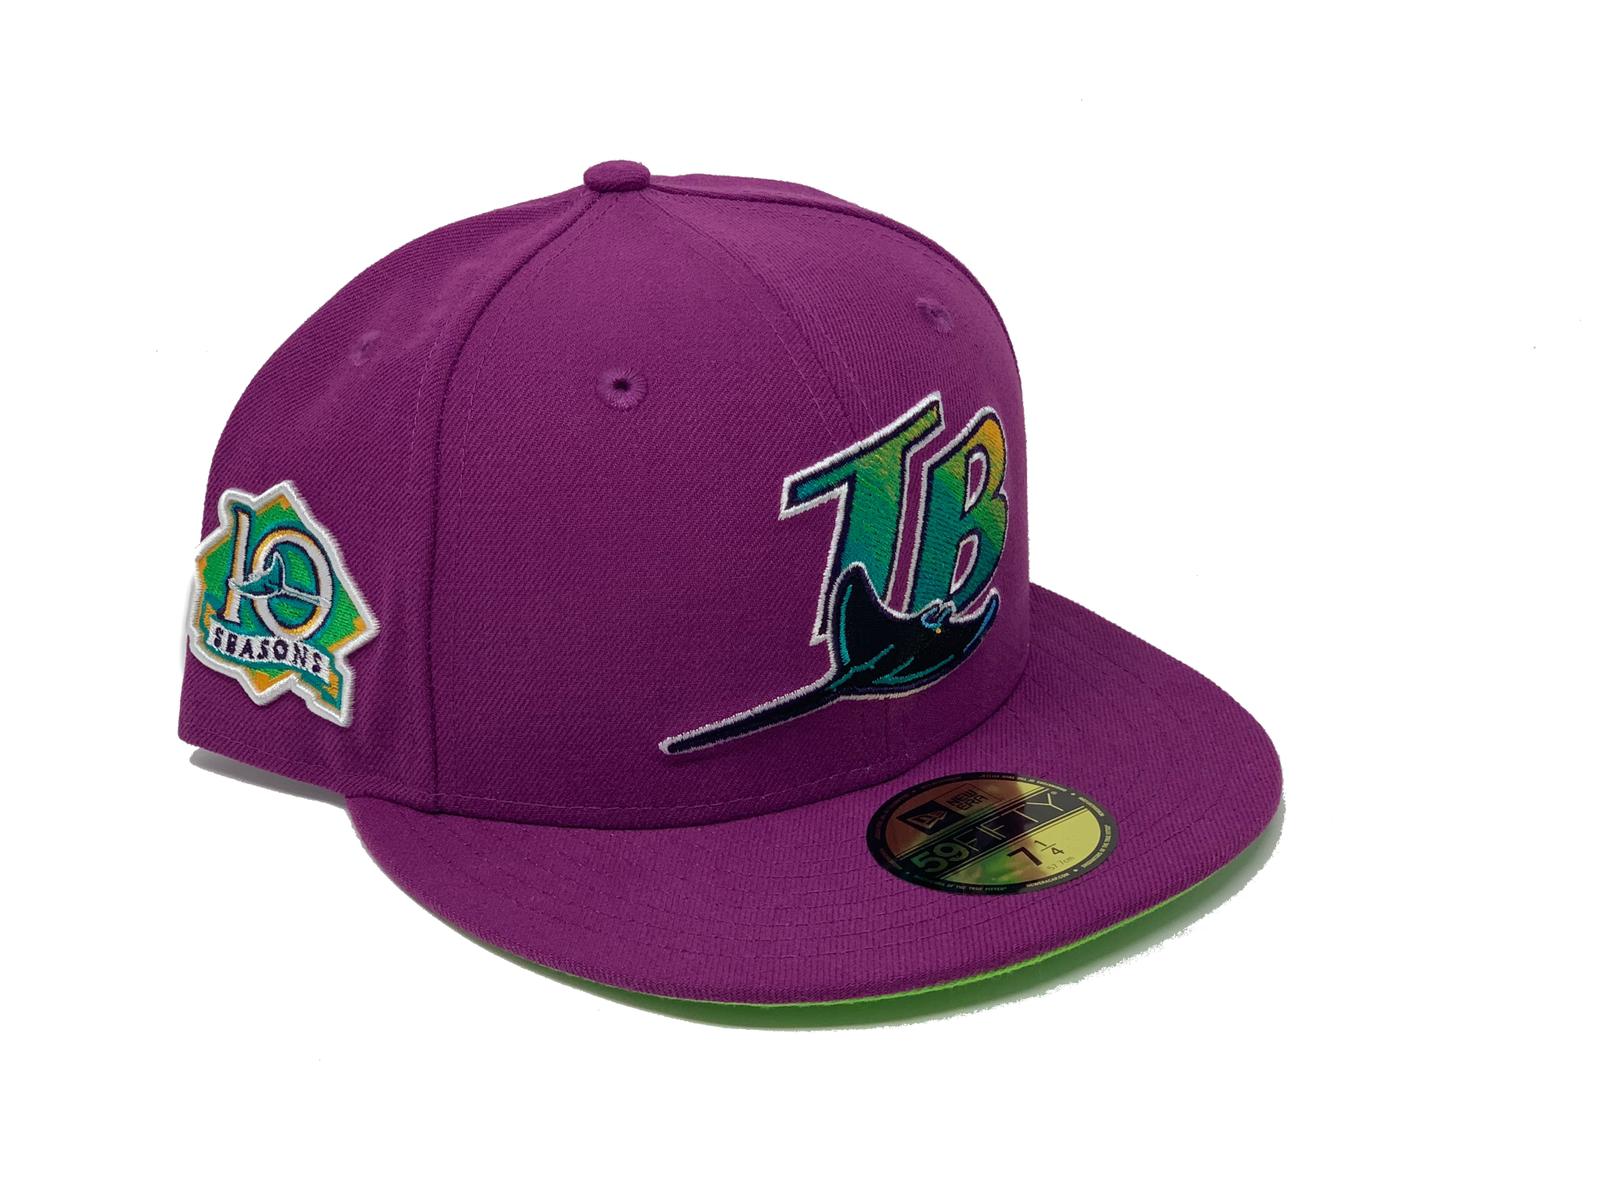 Tampa Bay Devil Rays Purple Hat Hot Sale, SAVE 42% 